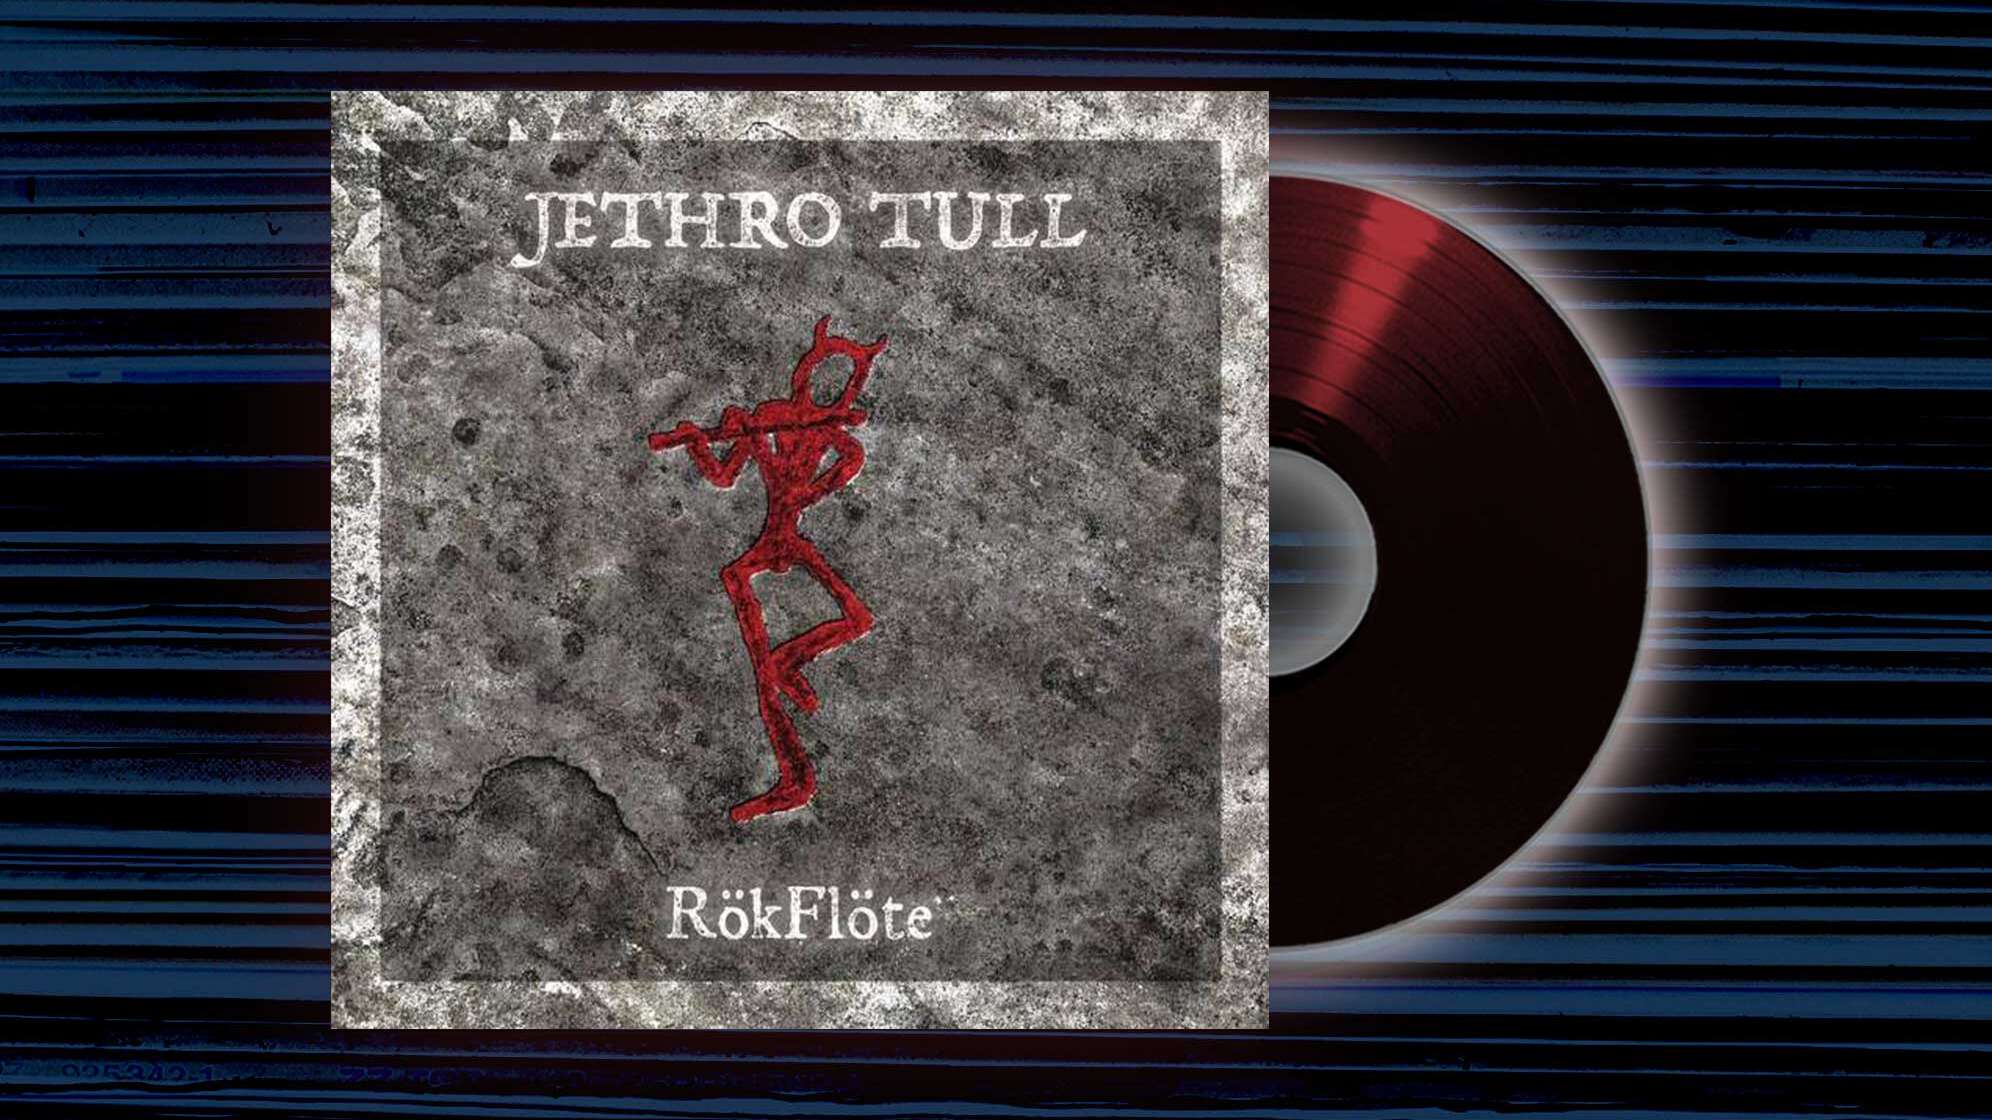 Albumcover von Jethro Tull's Album "Rökflöte"